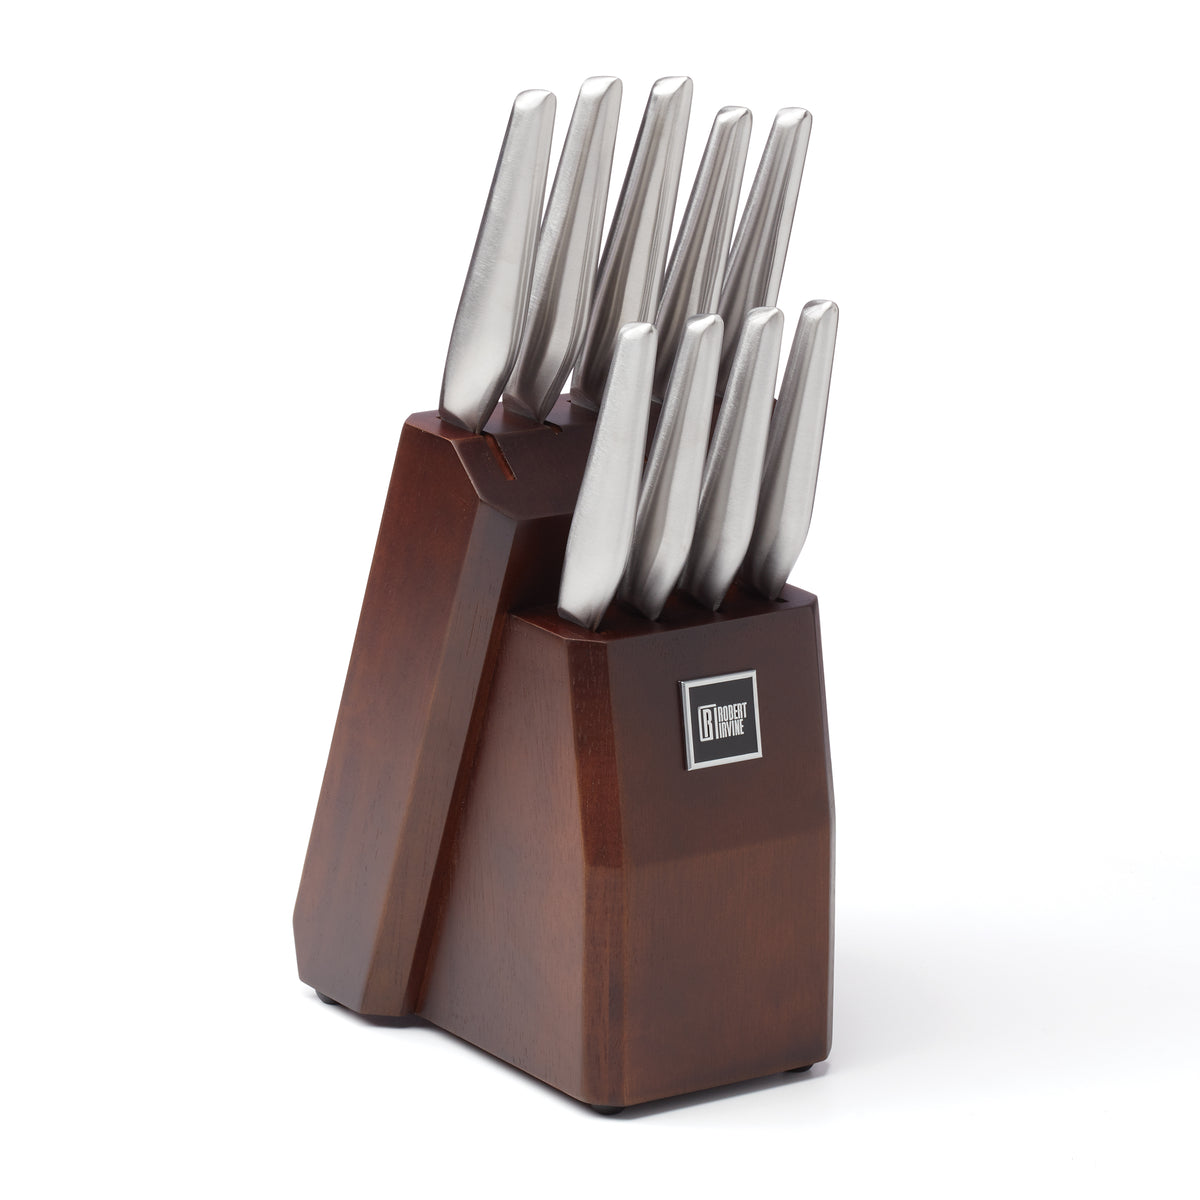 Chicago Cutlery Belden Block Set, 15 Pieces - 15 pieces